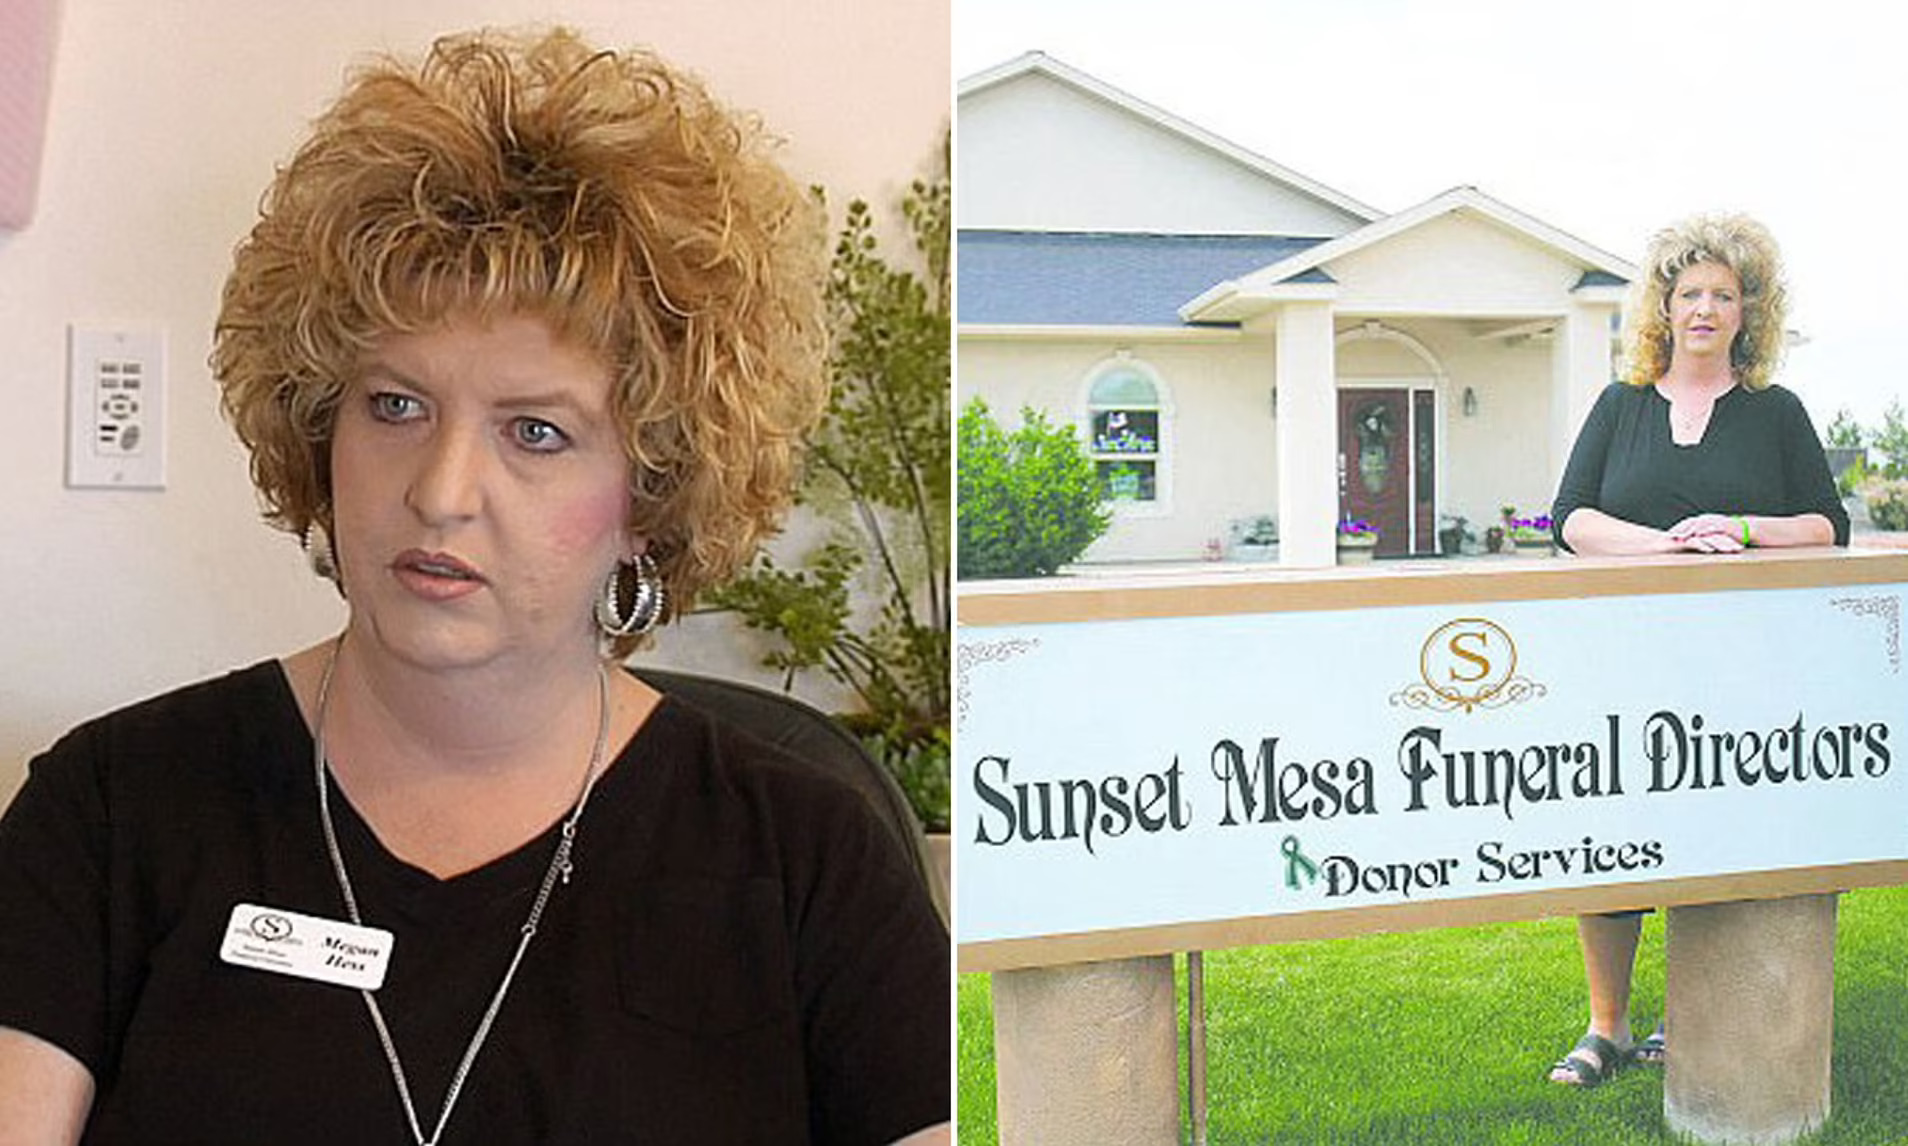 Megan Hess wearing a black top; Megan Hess standing near the Sunset Mesa Funeral Directors board